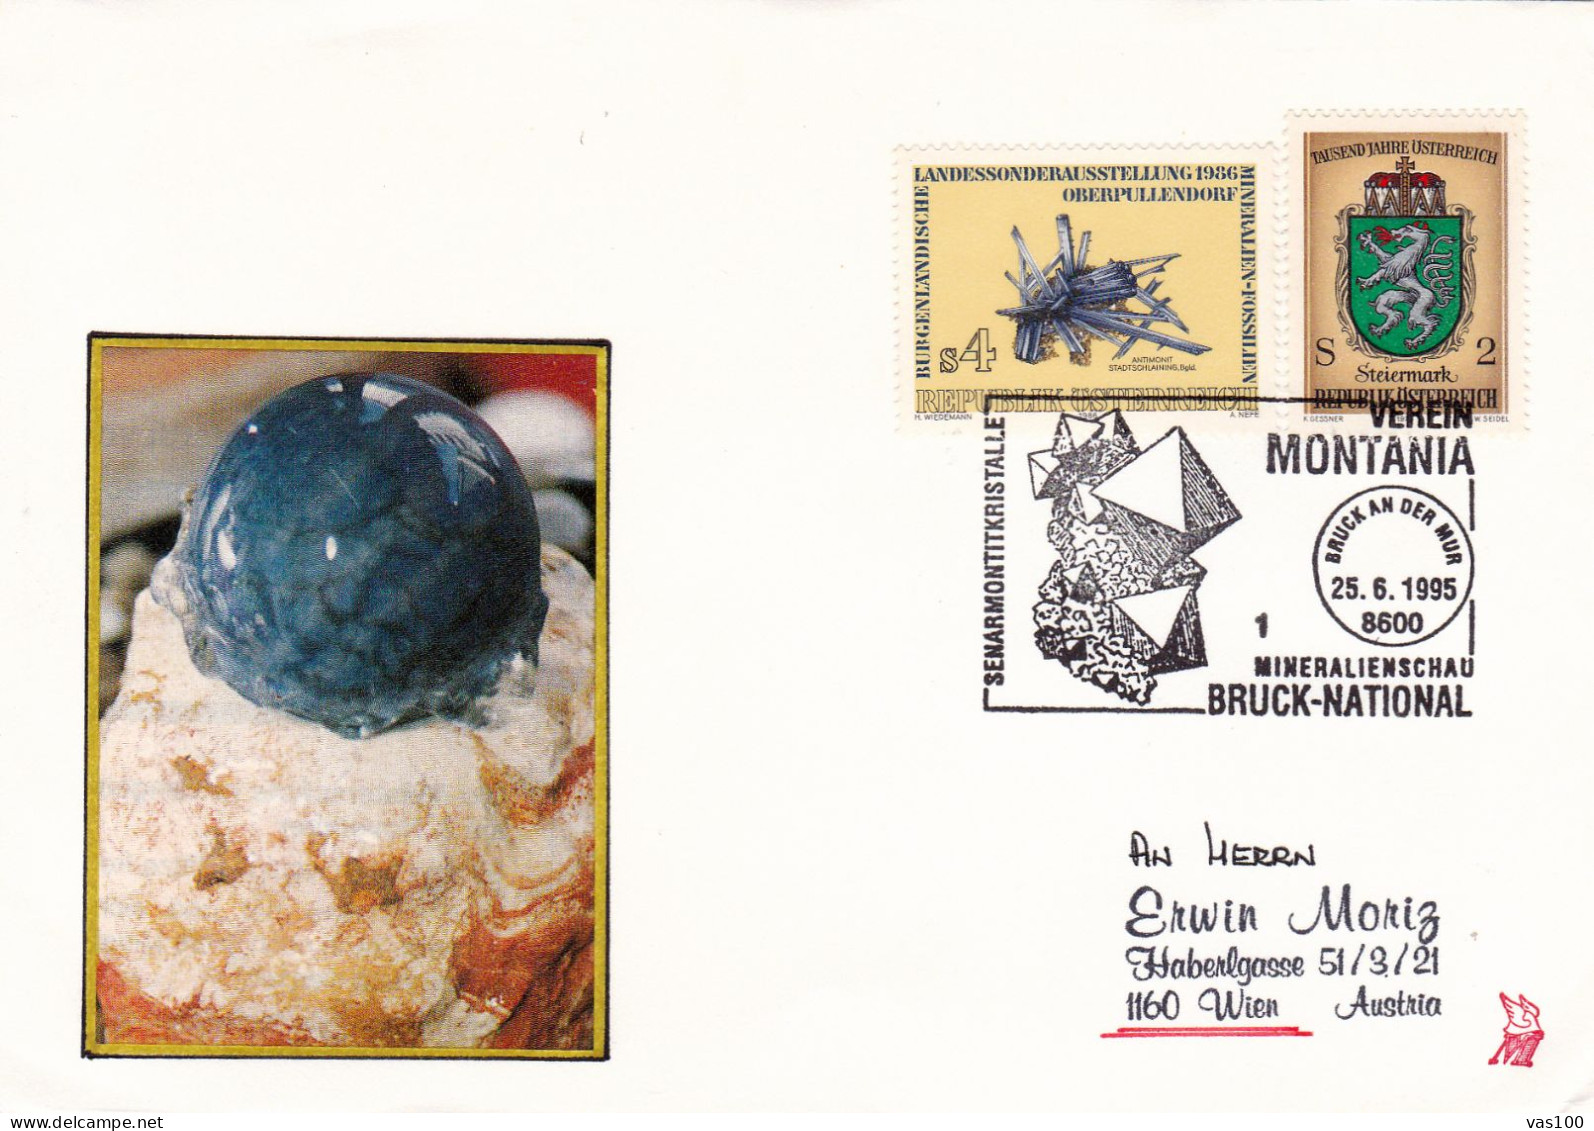 AUSTRIA POSTAL HISTORY / MINERALIENSCHAU BRUCK-NATIONAL, 25.06.1995 - Mineralien